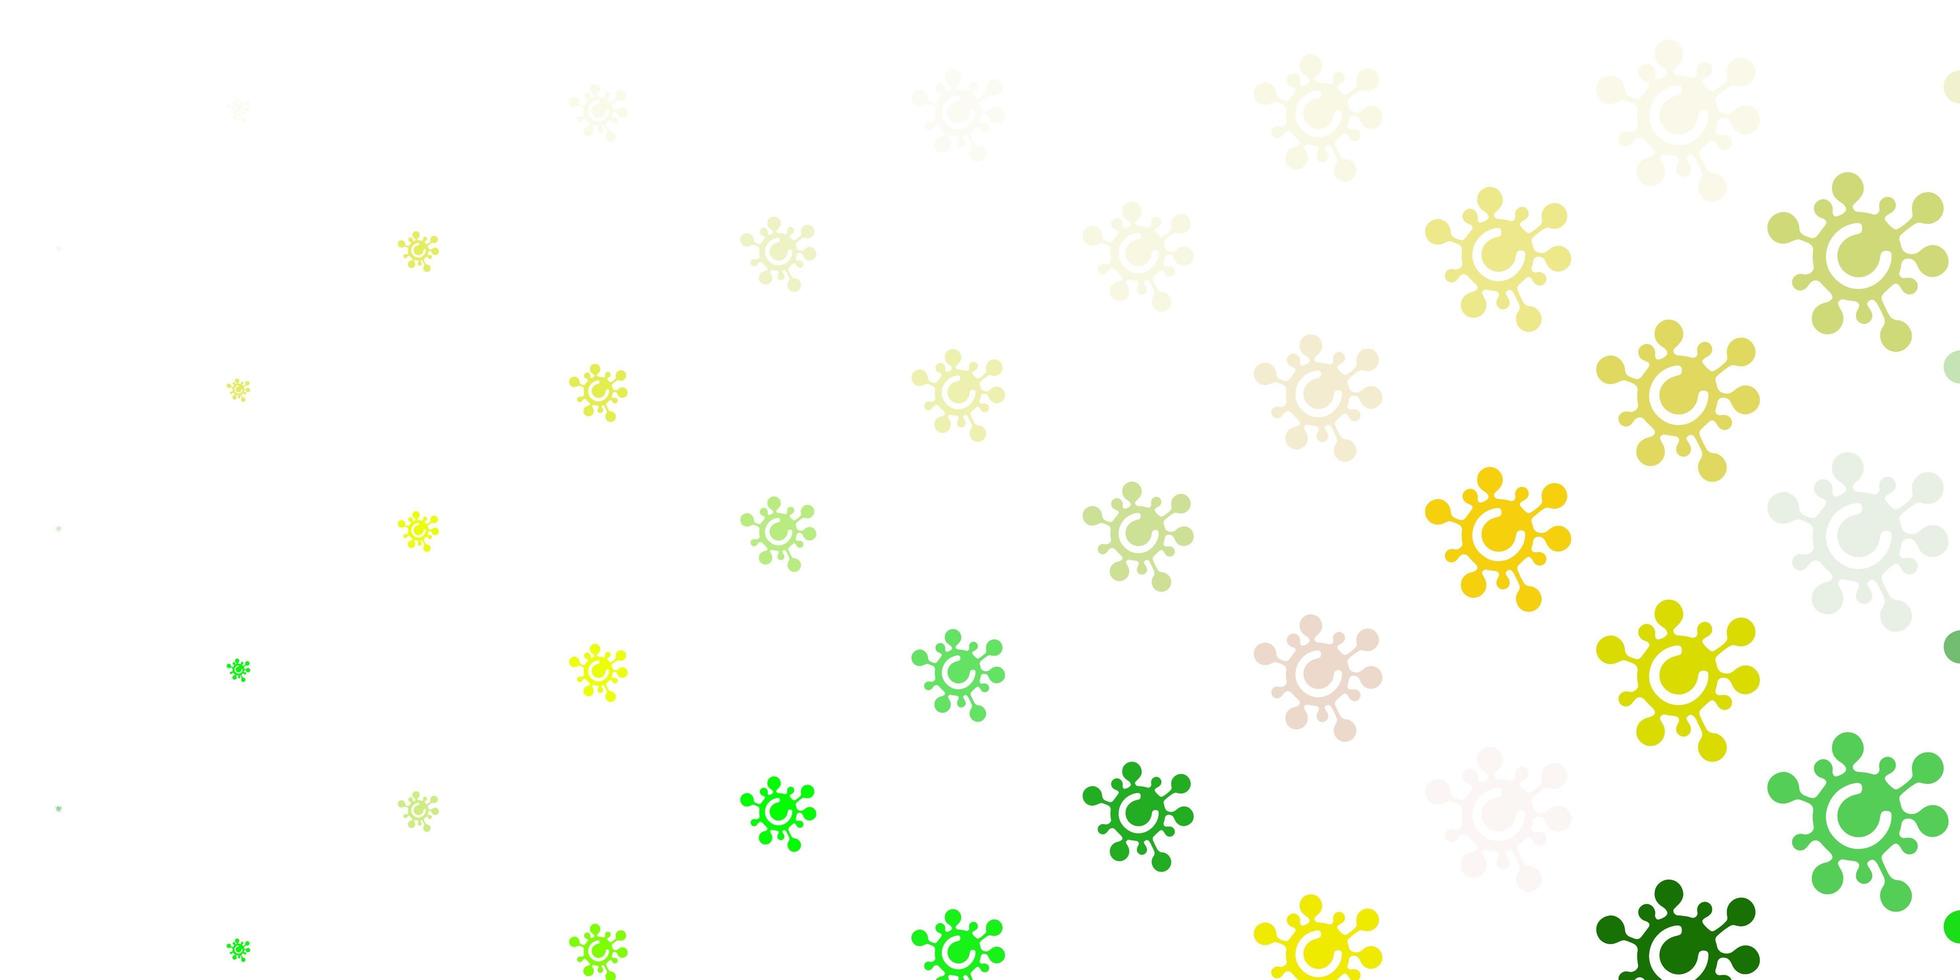 Light Green Yellow vector pattern with coronavirus elements